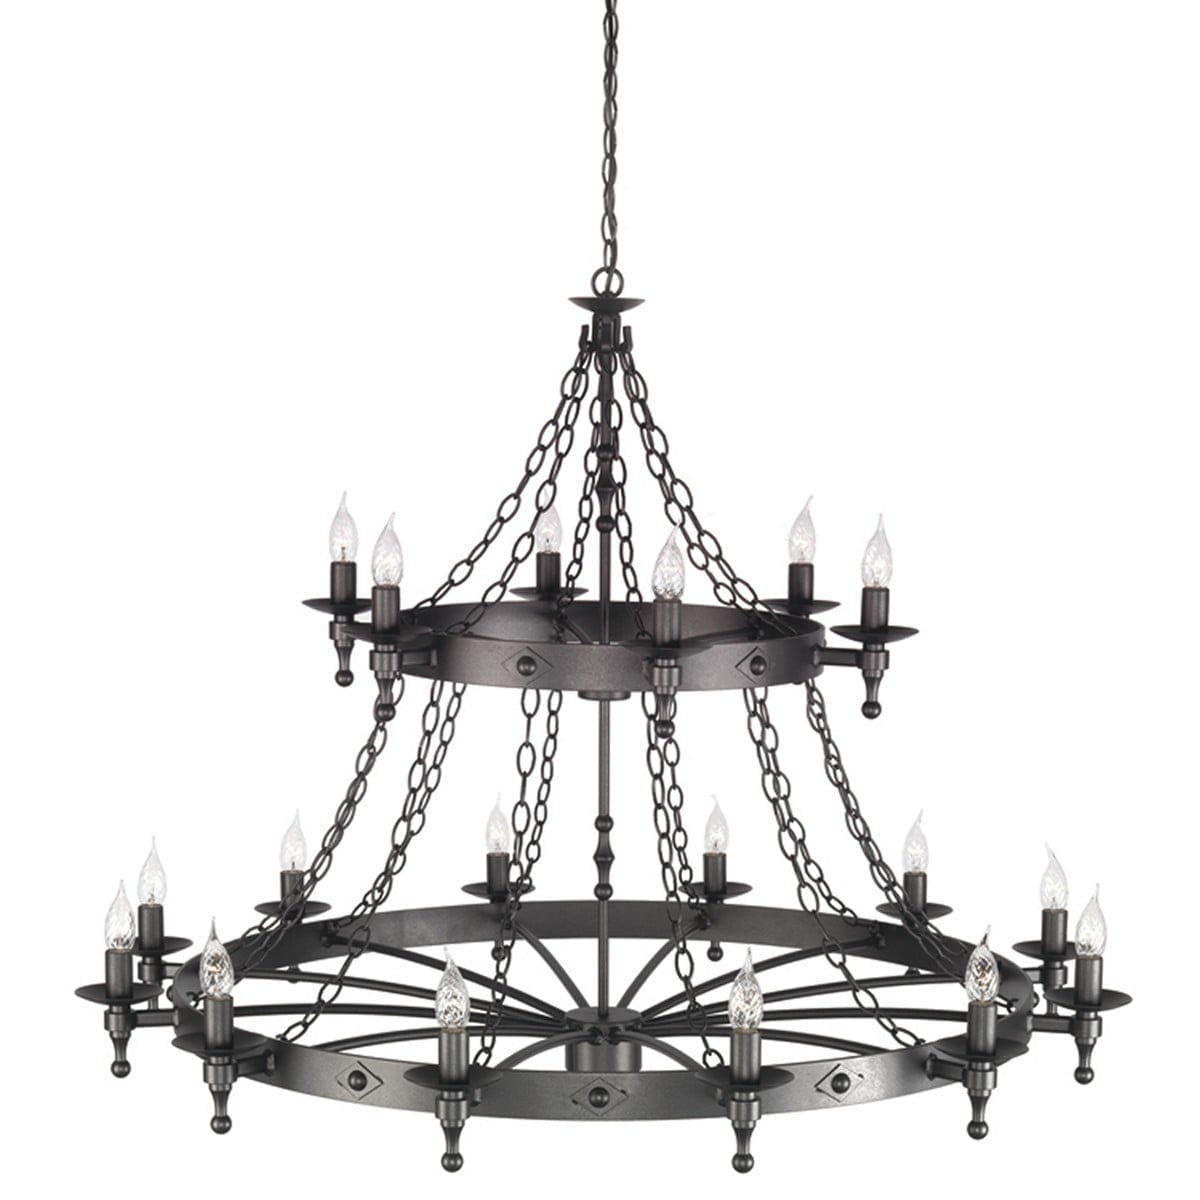 Medieval chandelier 50